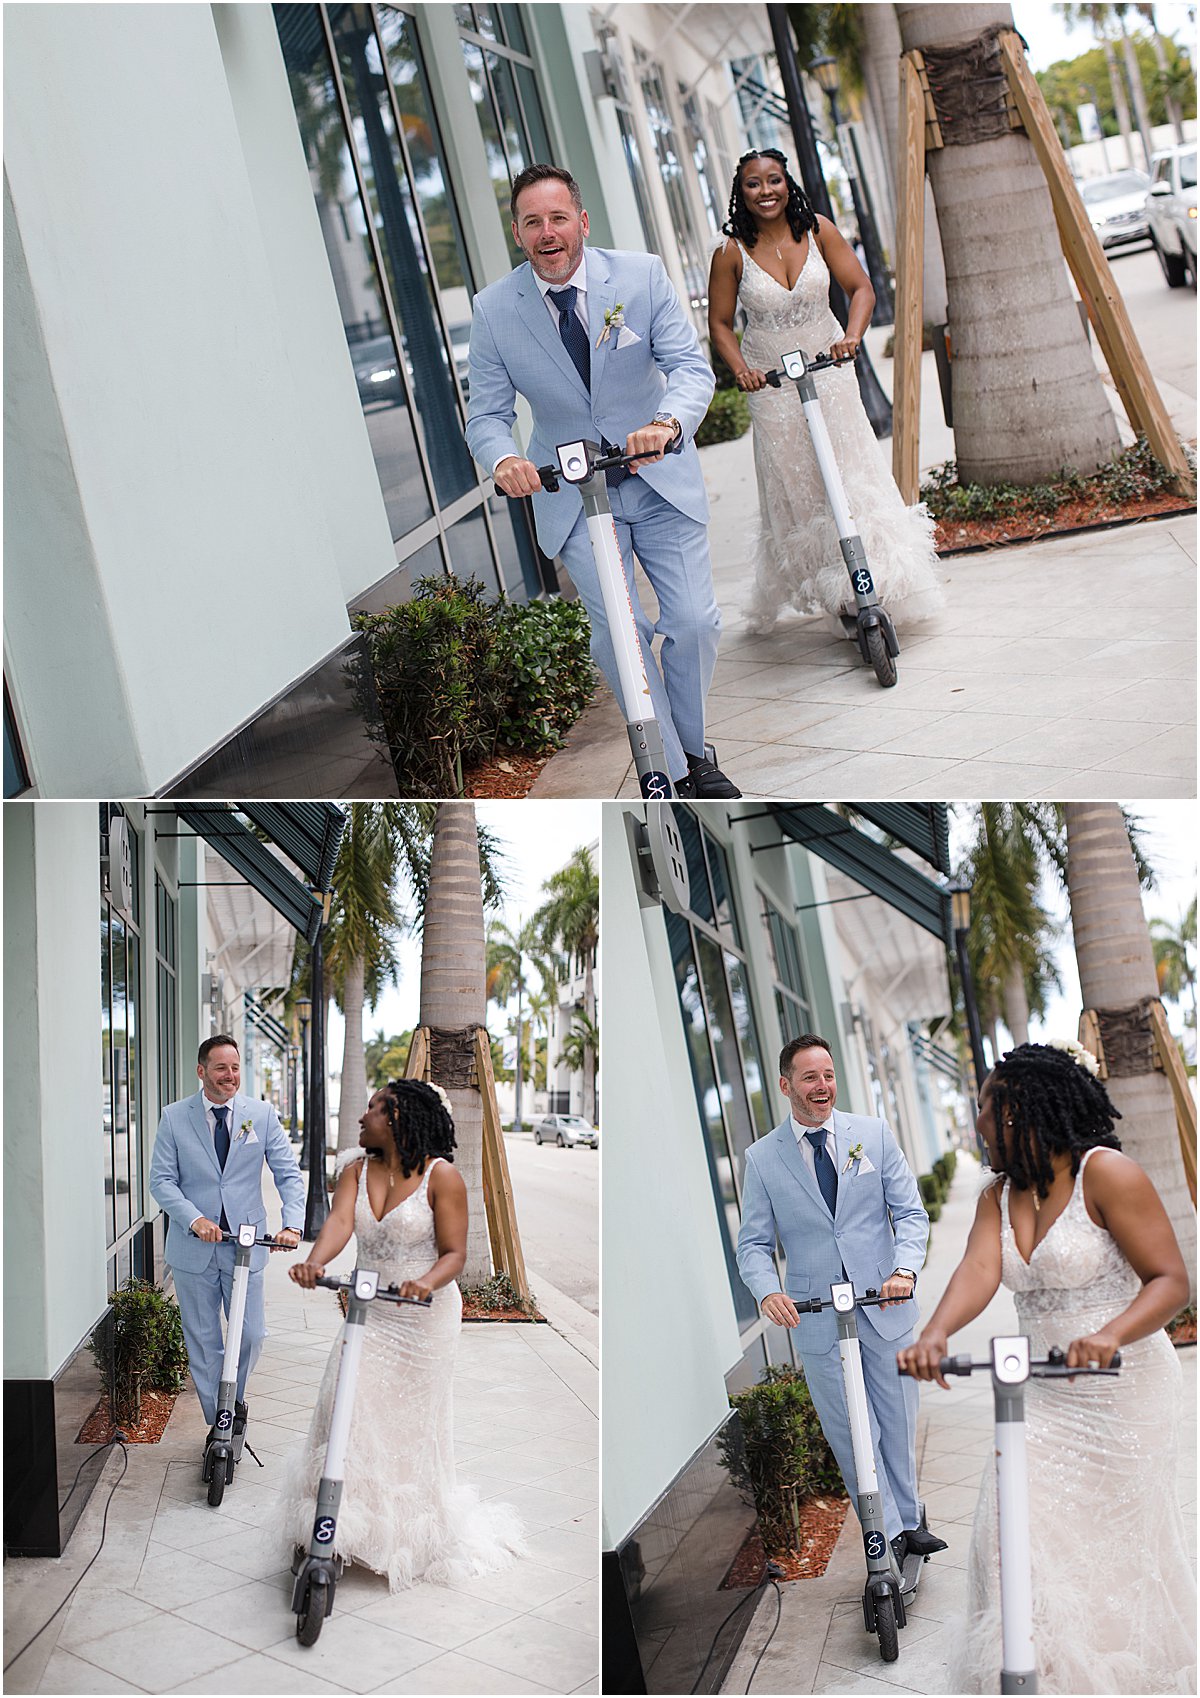 Modern and Elegant Wedding | Hyatt Place West Palm Beach | Palm Beach Florida | Married in Palm Beach | www.marriedinpalmbeach.com | Sonju Photography